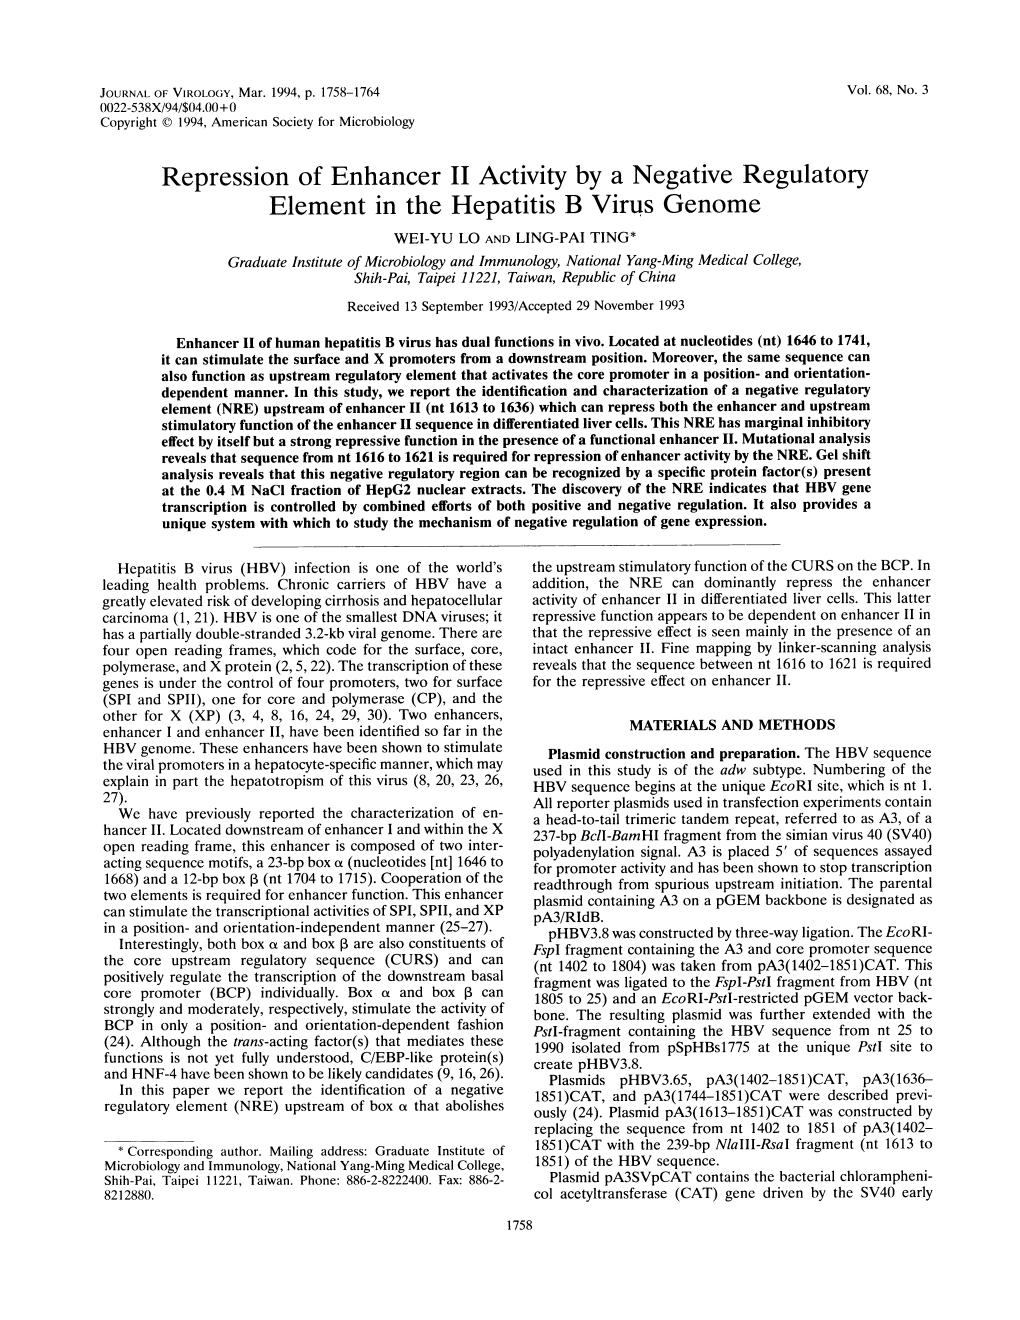 Repression of Enhancerii Activity by a Negative Regulatory Element